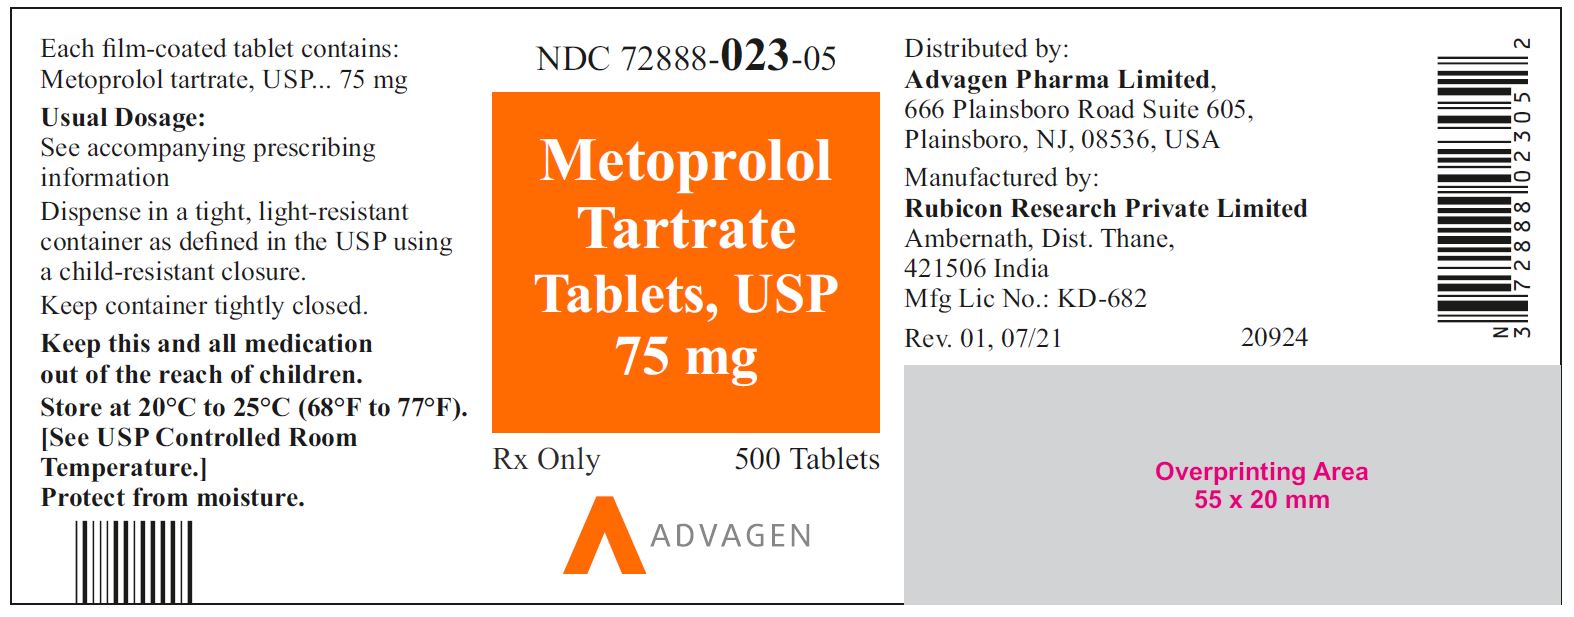 NDC 72888-023-05 - Metoprolol Tartrate Tablets, USP 75 mg - 500 Tablets